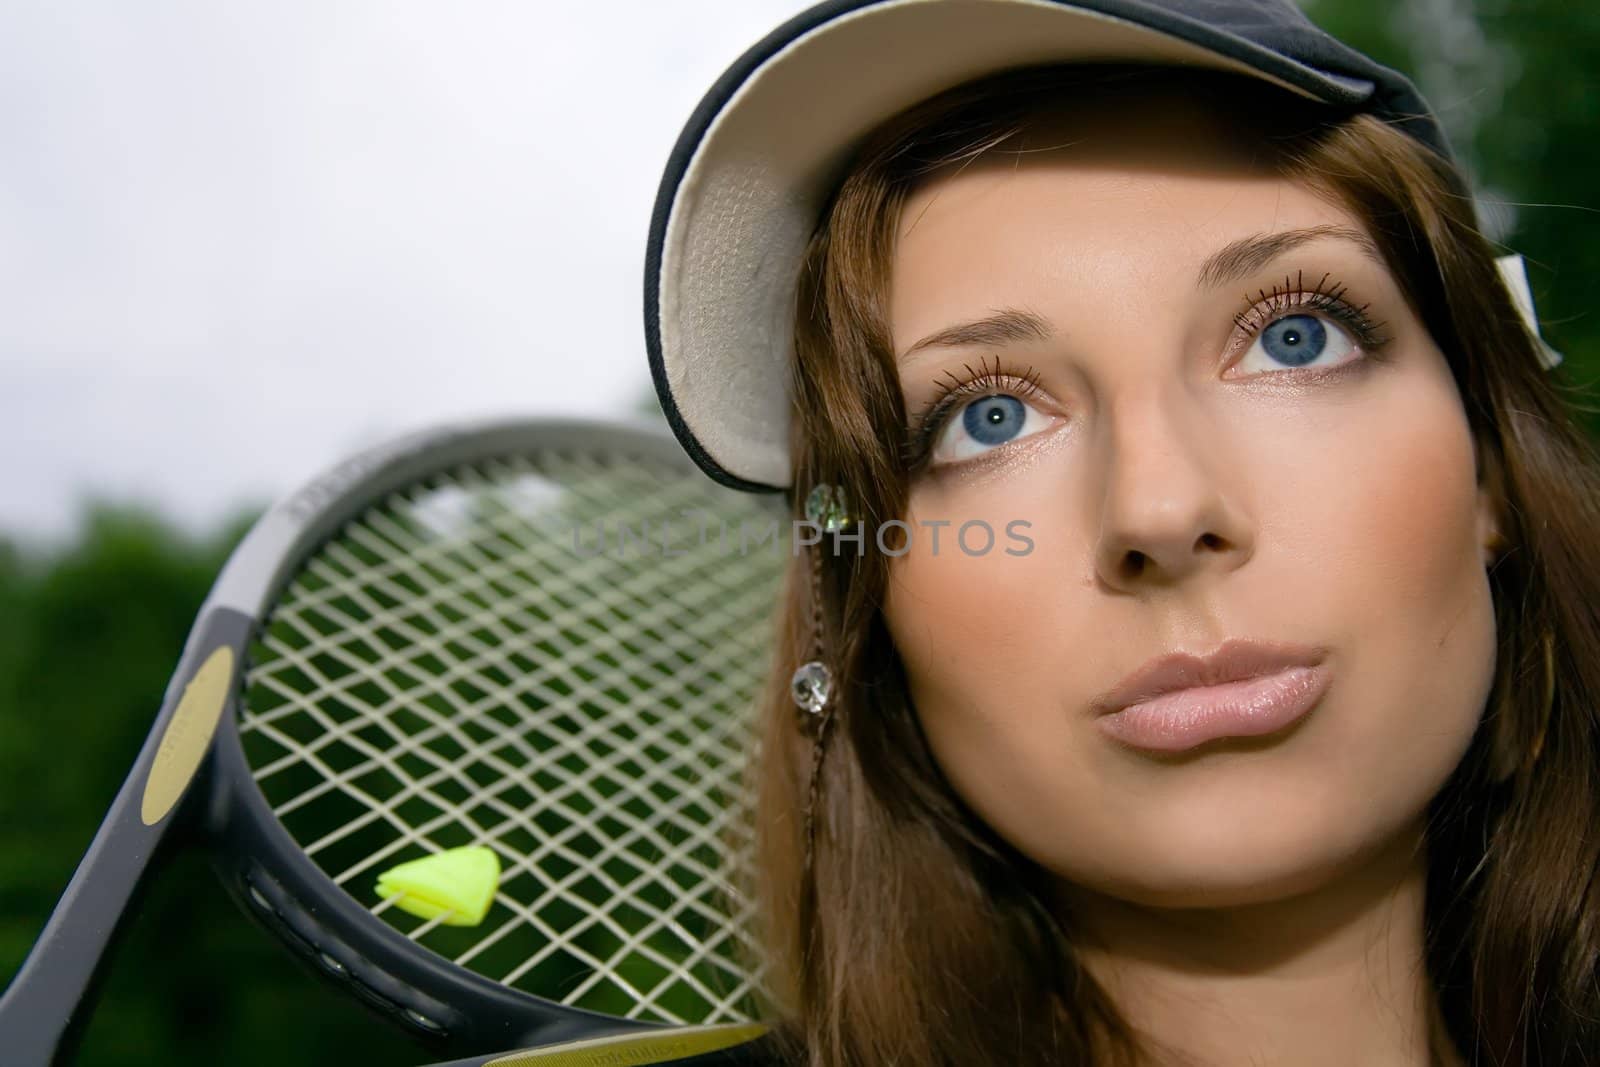 Pretty tennis player by janza